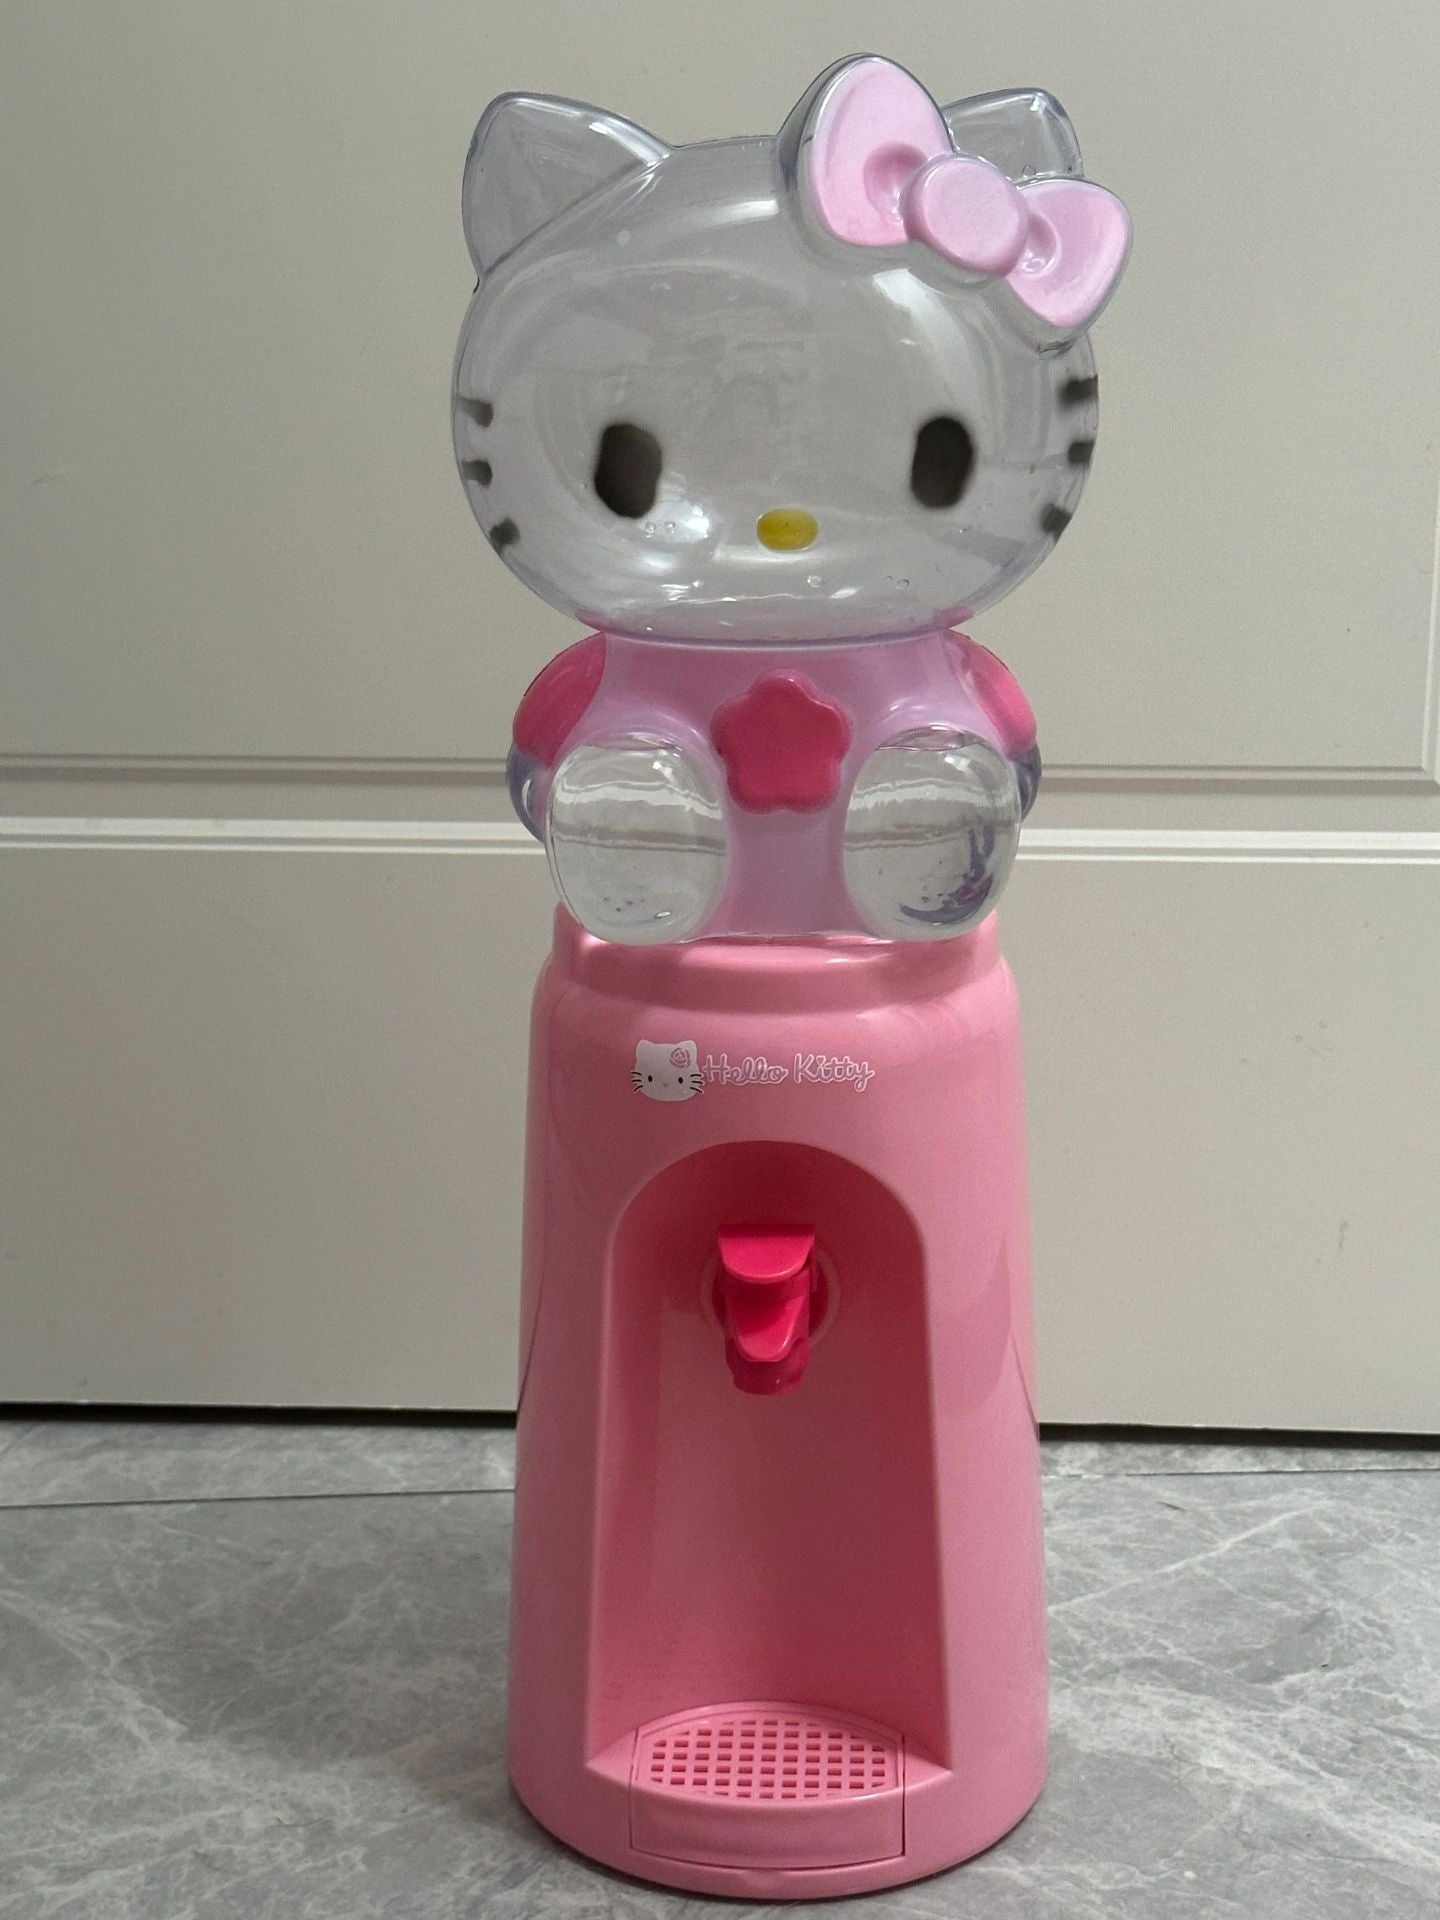 Hellokitty Mini Water Dispenser Toy Miniature Household Water Cooler Fountain Toy Drinking Fountain Model Kids